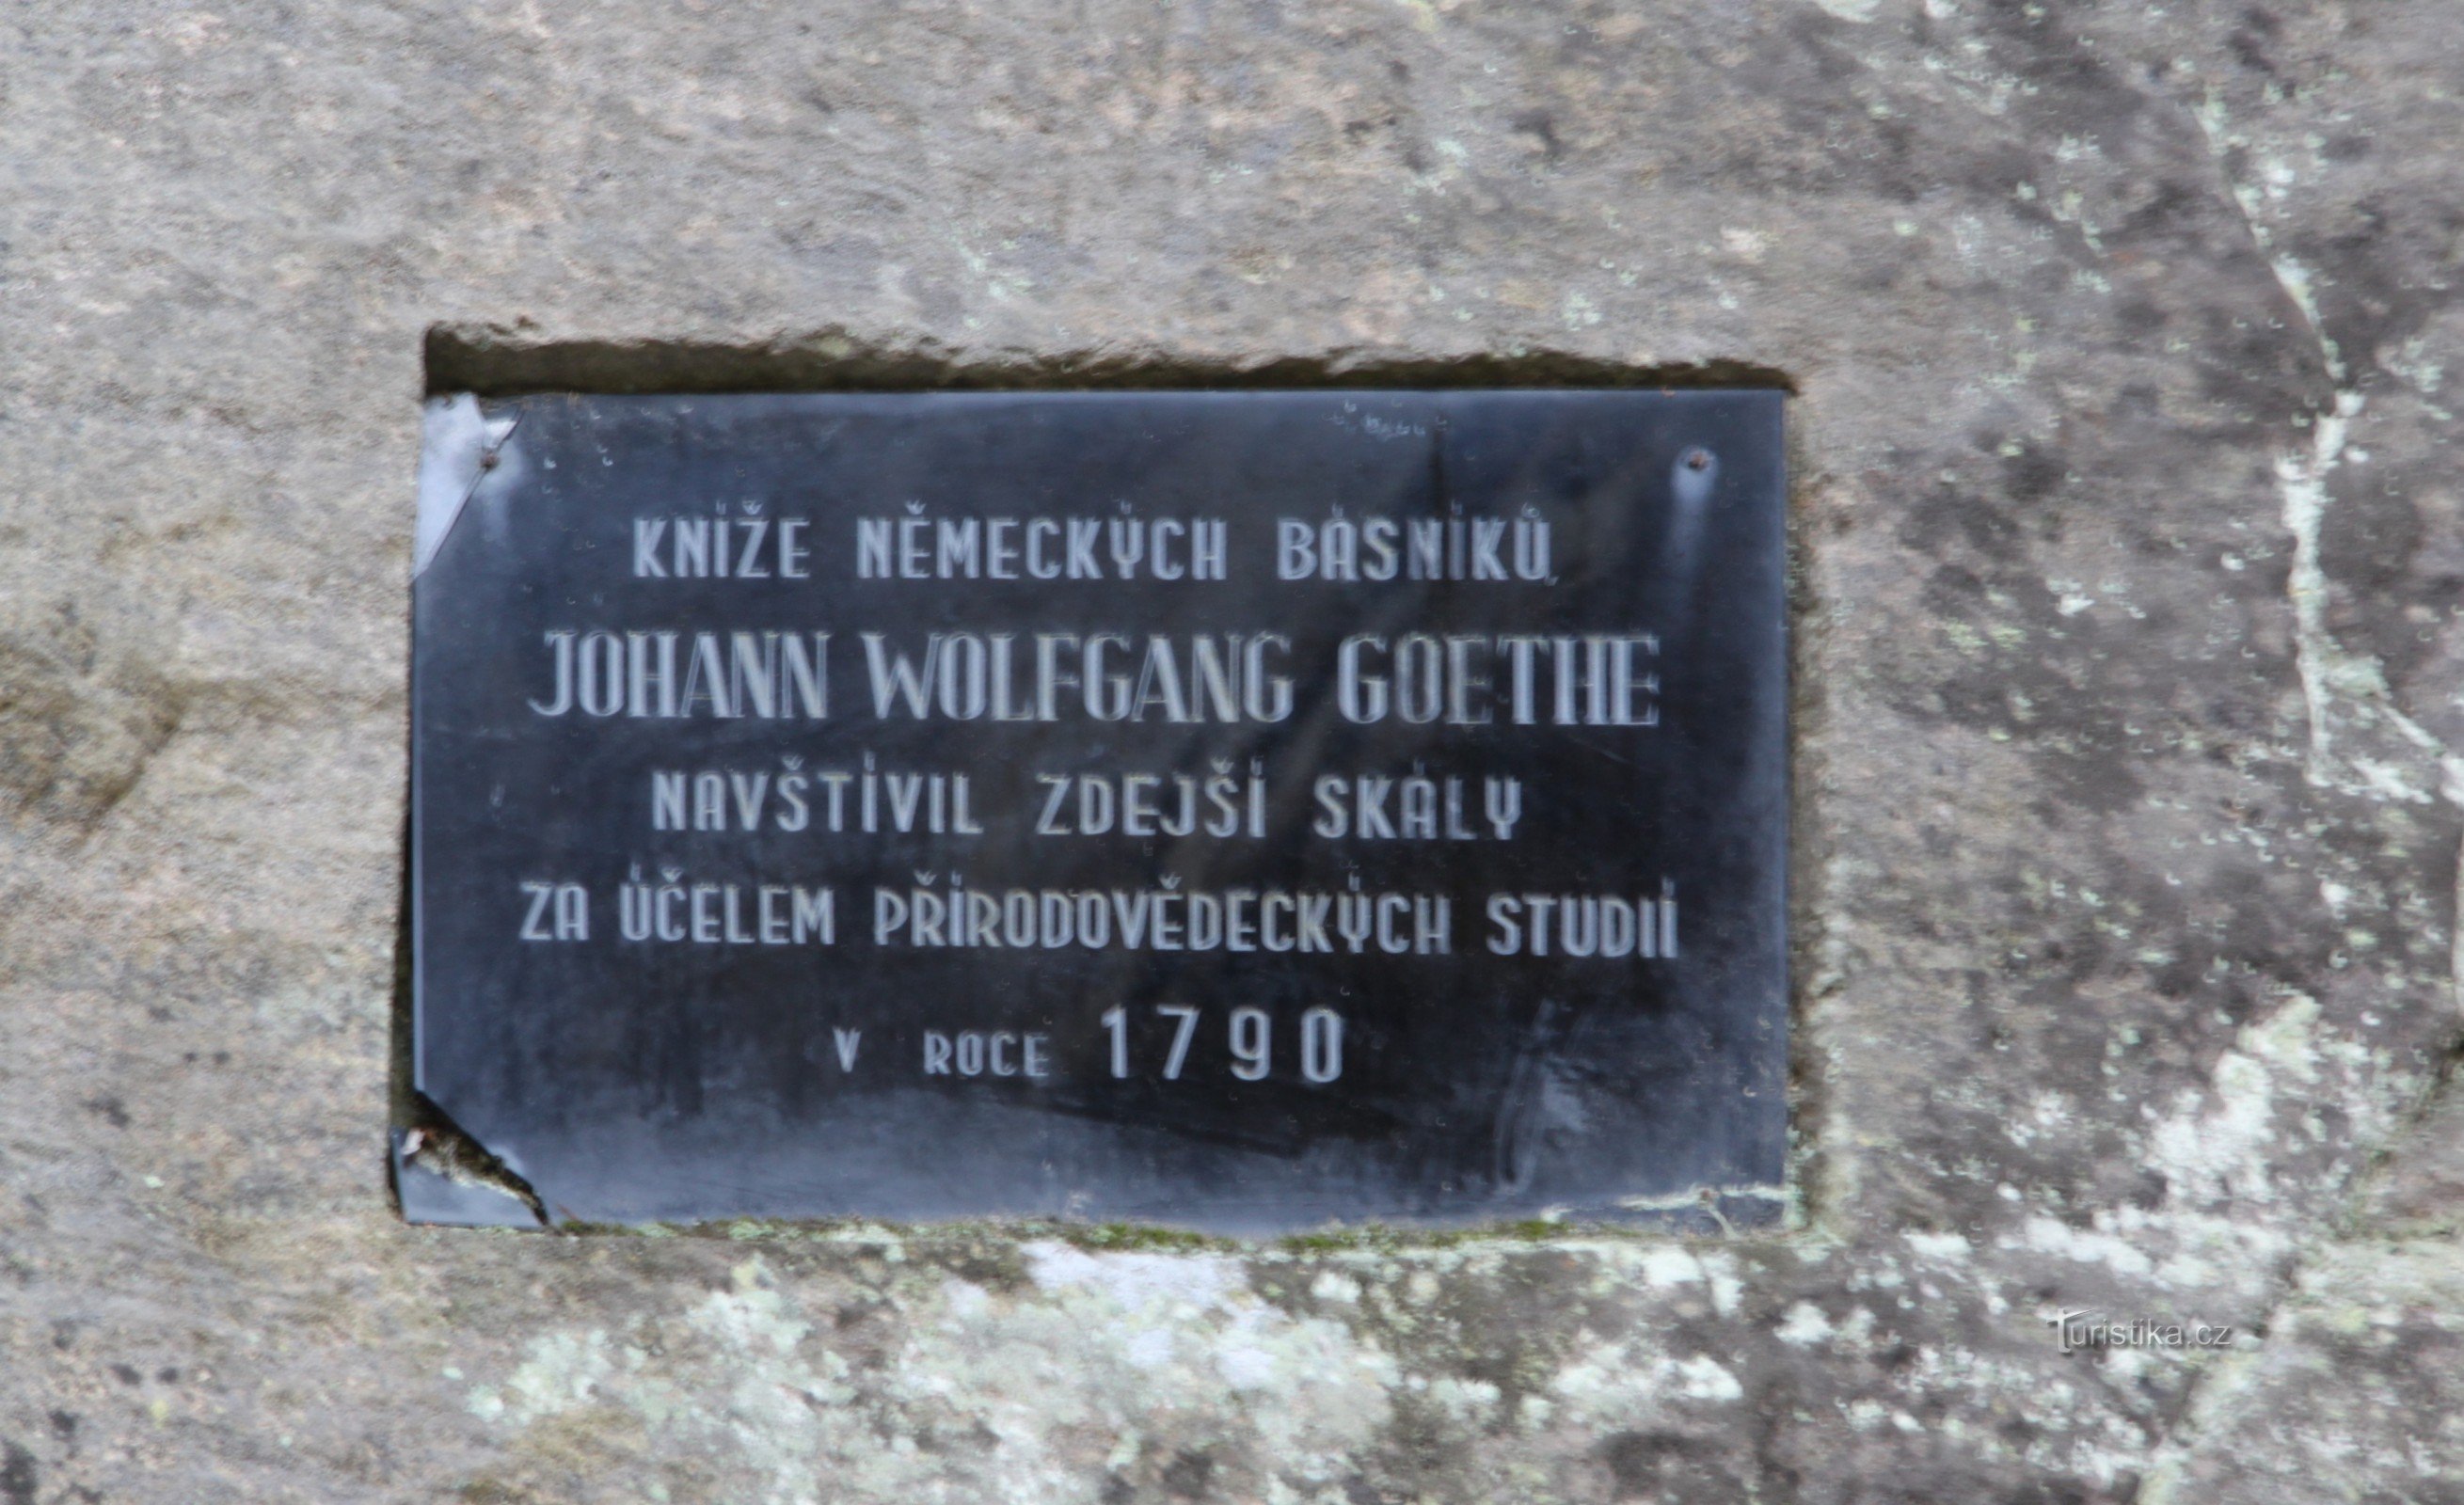 JWGoethe emlékműve Adršpachban – Goethe emléktáblája